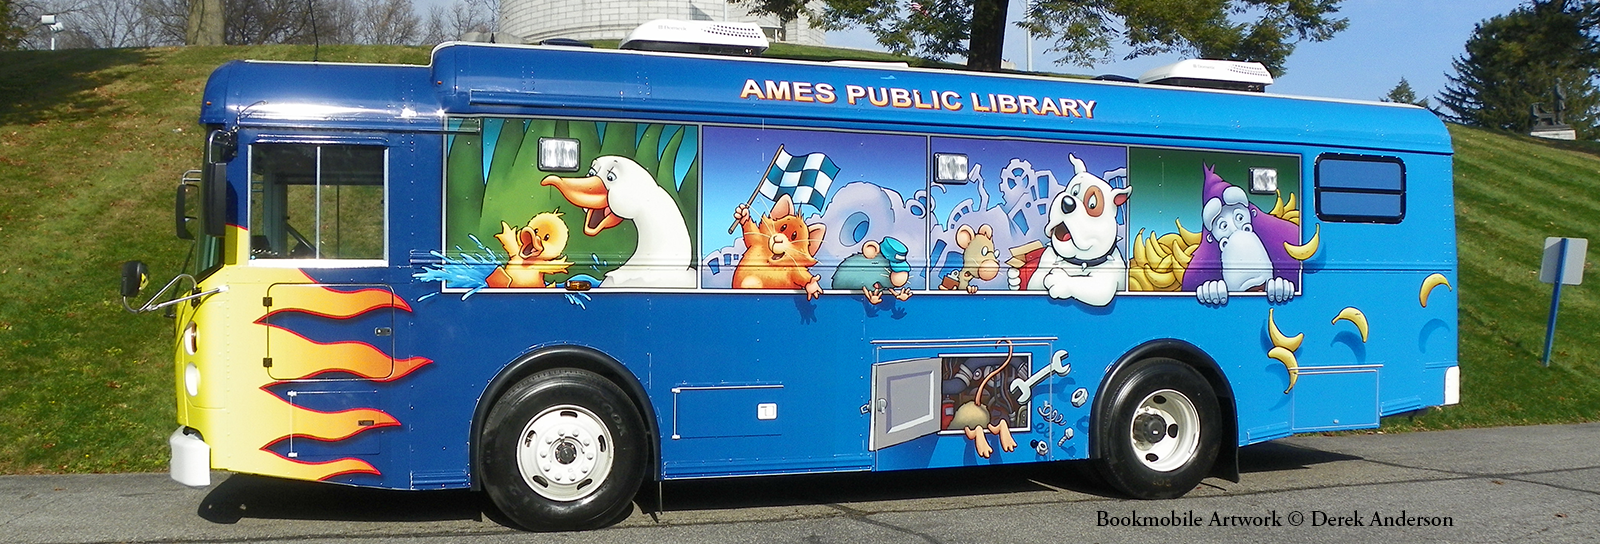 Ames Public Library Bookmobile